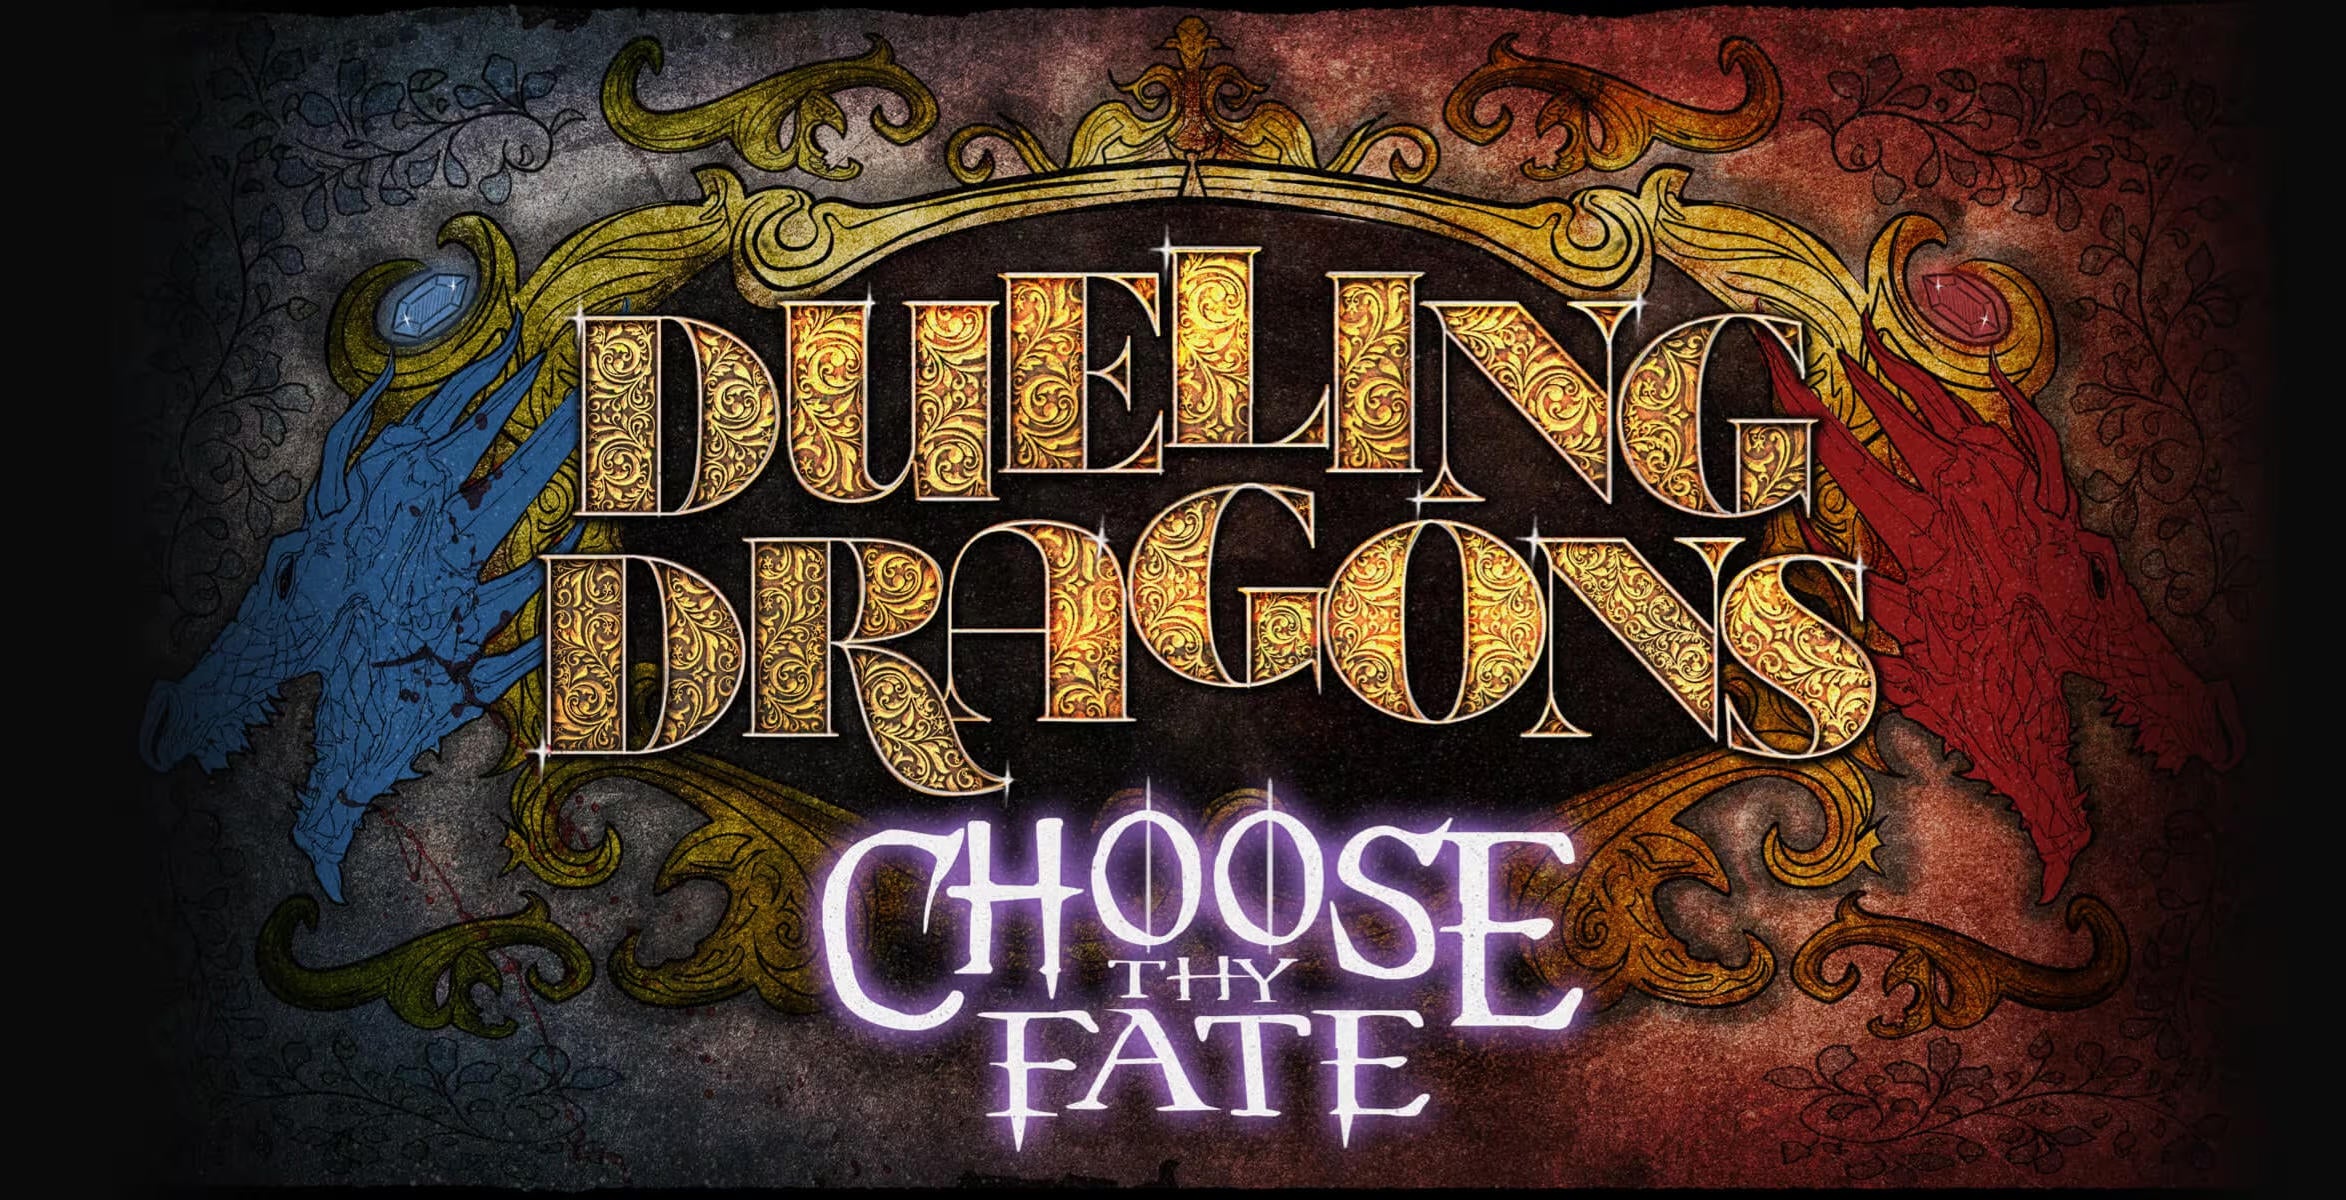 universal-studios-orlando-halloween-horror-nights-dueling-dragons-choose-thy-fate.jpg